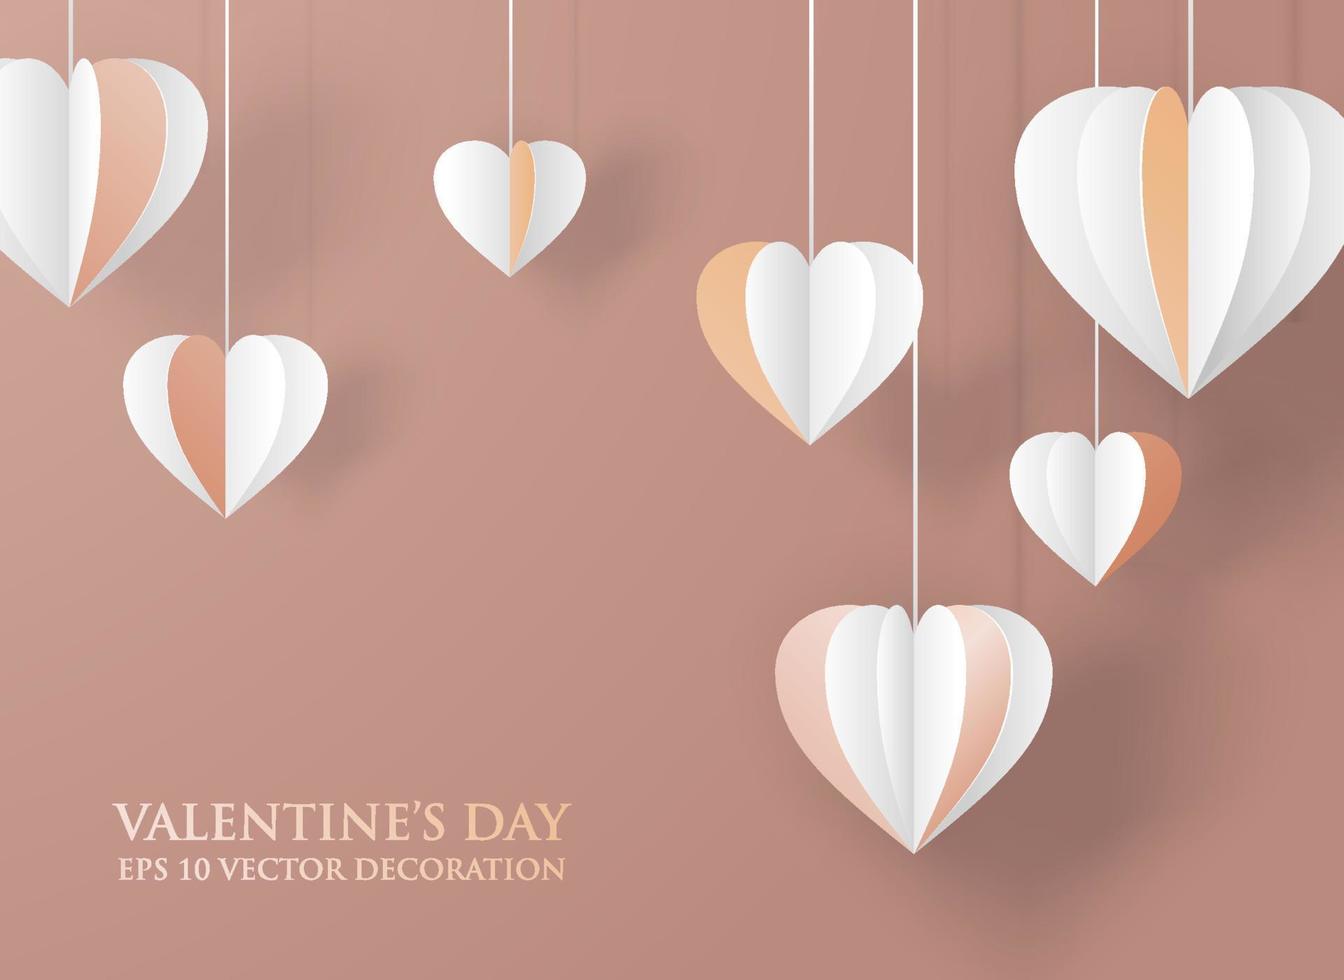 Elegant golden valentine's day background with hanging paper craft hearts decoration vector illustration template